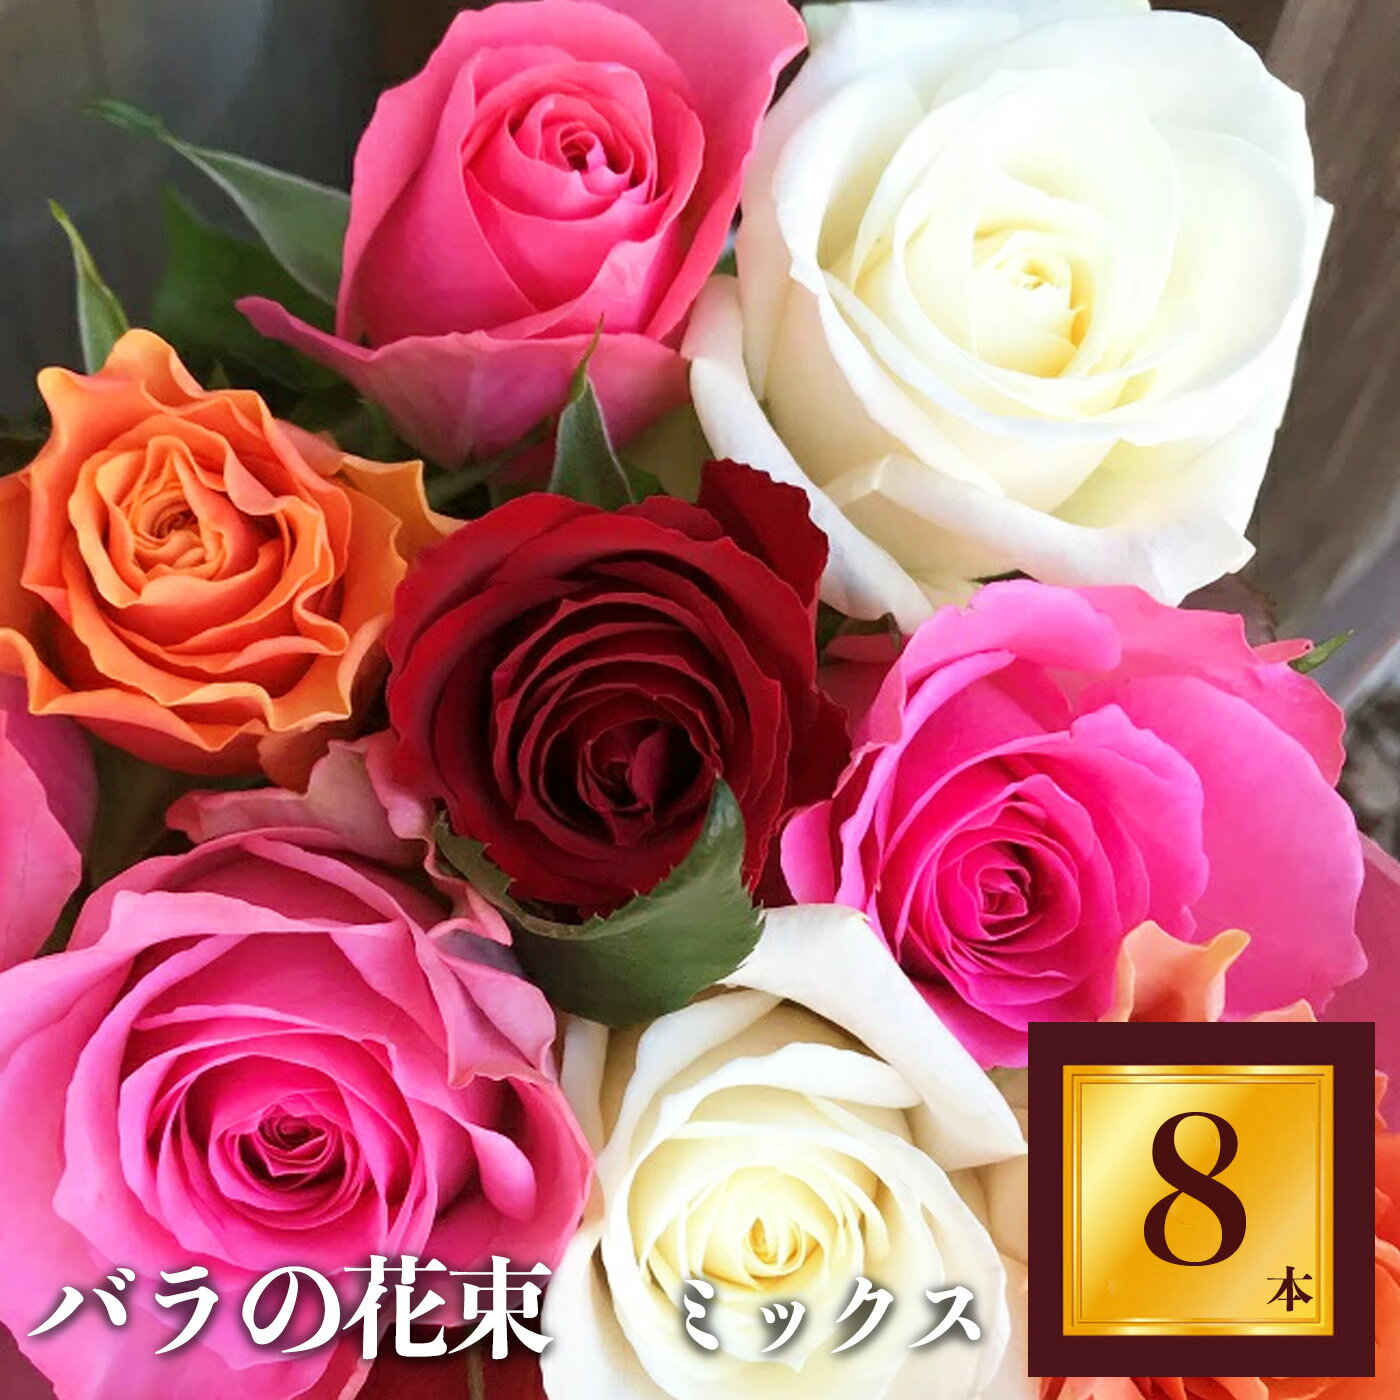 Heguri Rose バラの花束(8本)ローズ フラワー 花 新鮮 高品質 綺麗 平群のバラ 花束 平群ブランド 誕生日 記念日 お祝い